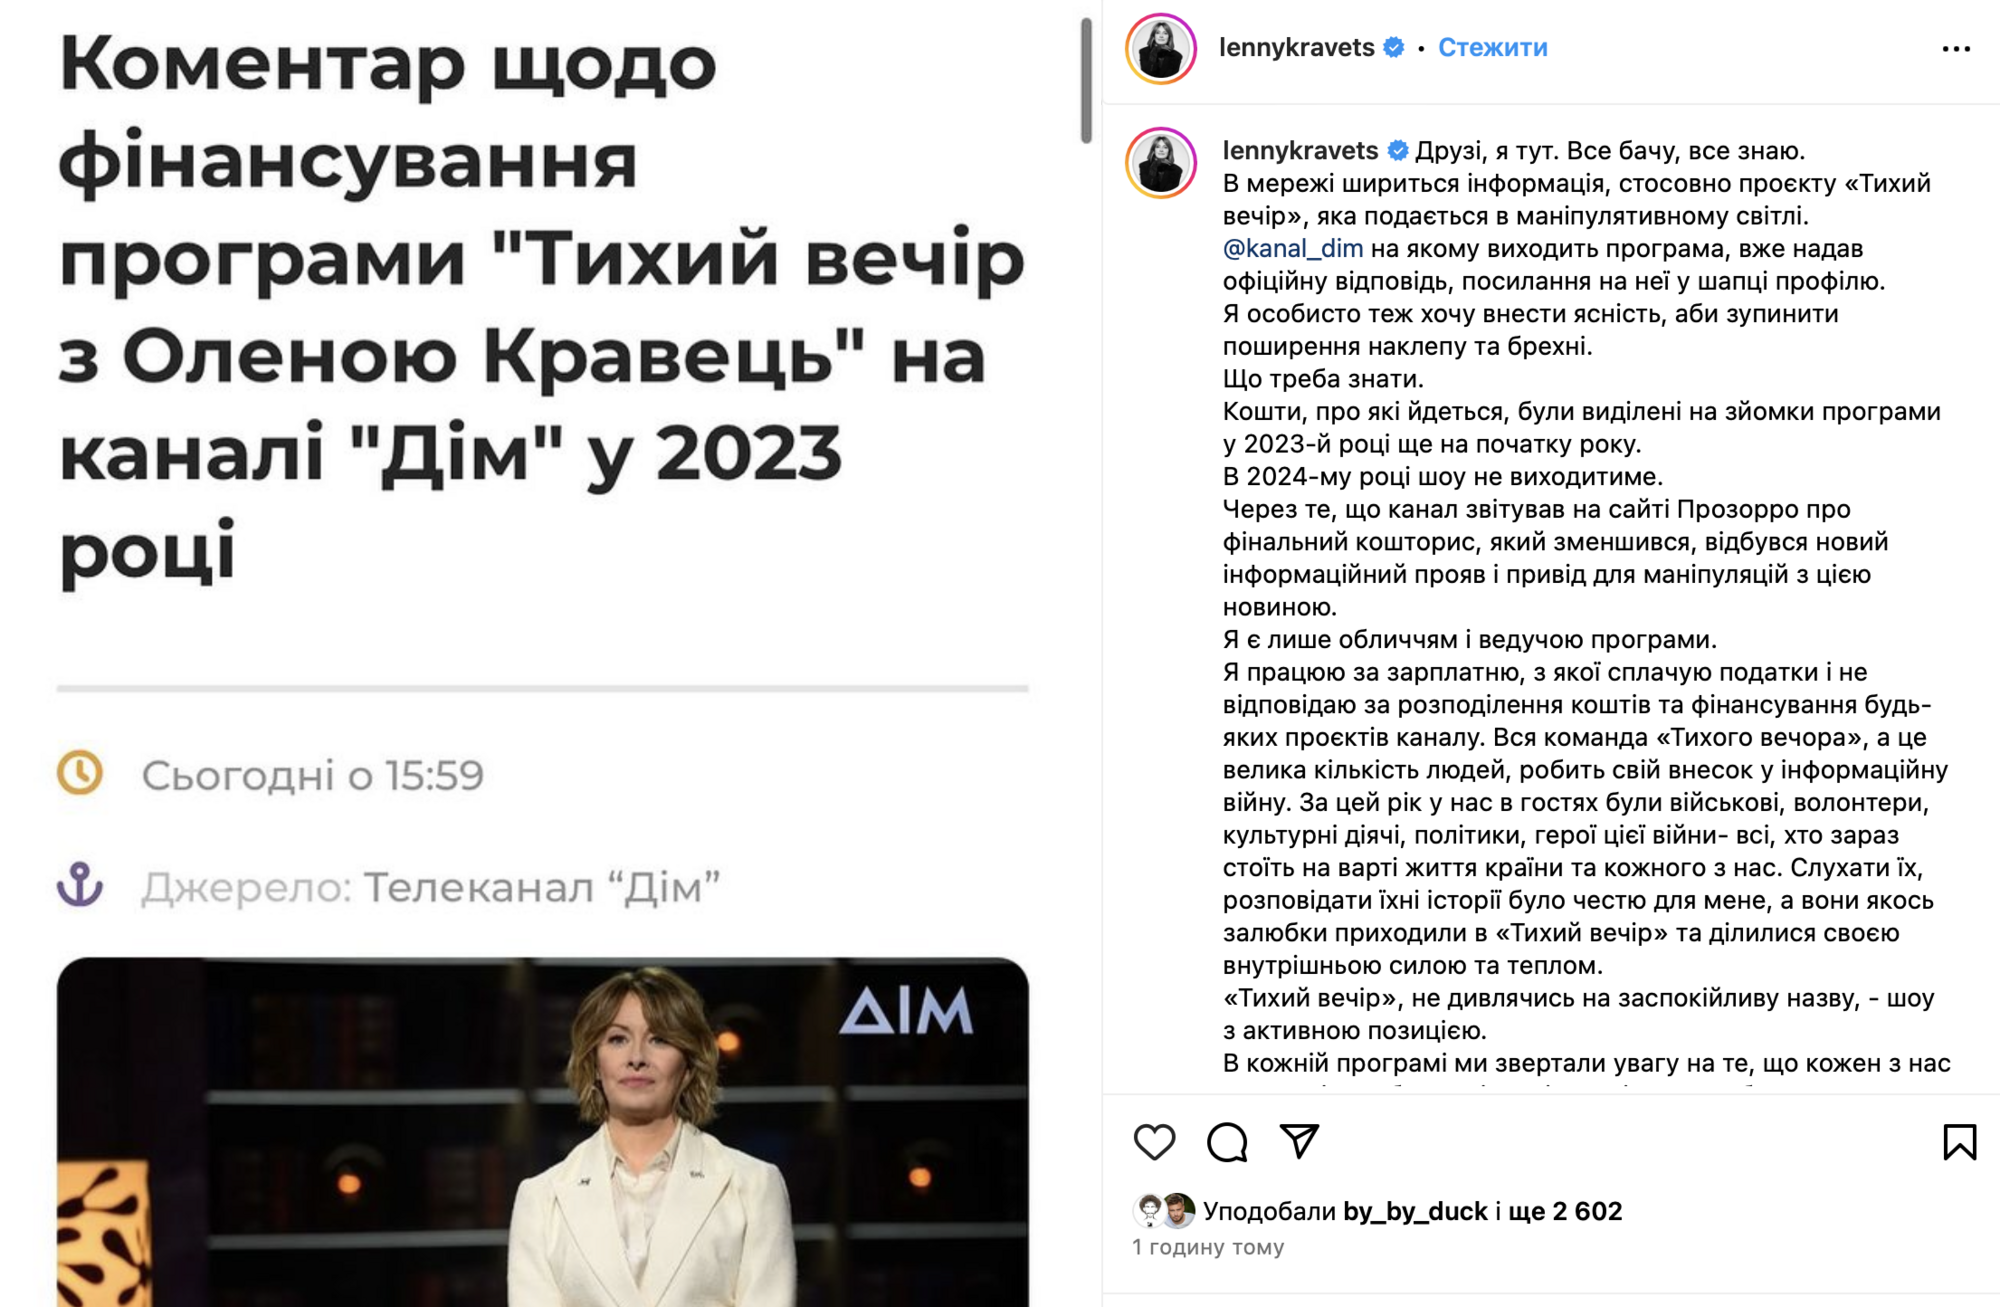 27 млн гривен на шоу: Елена Кравец расставила точки над "і" в скандале с финансированием проекта, который она ведет